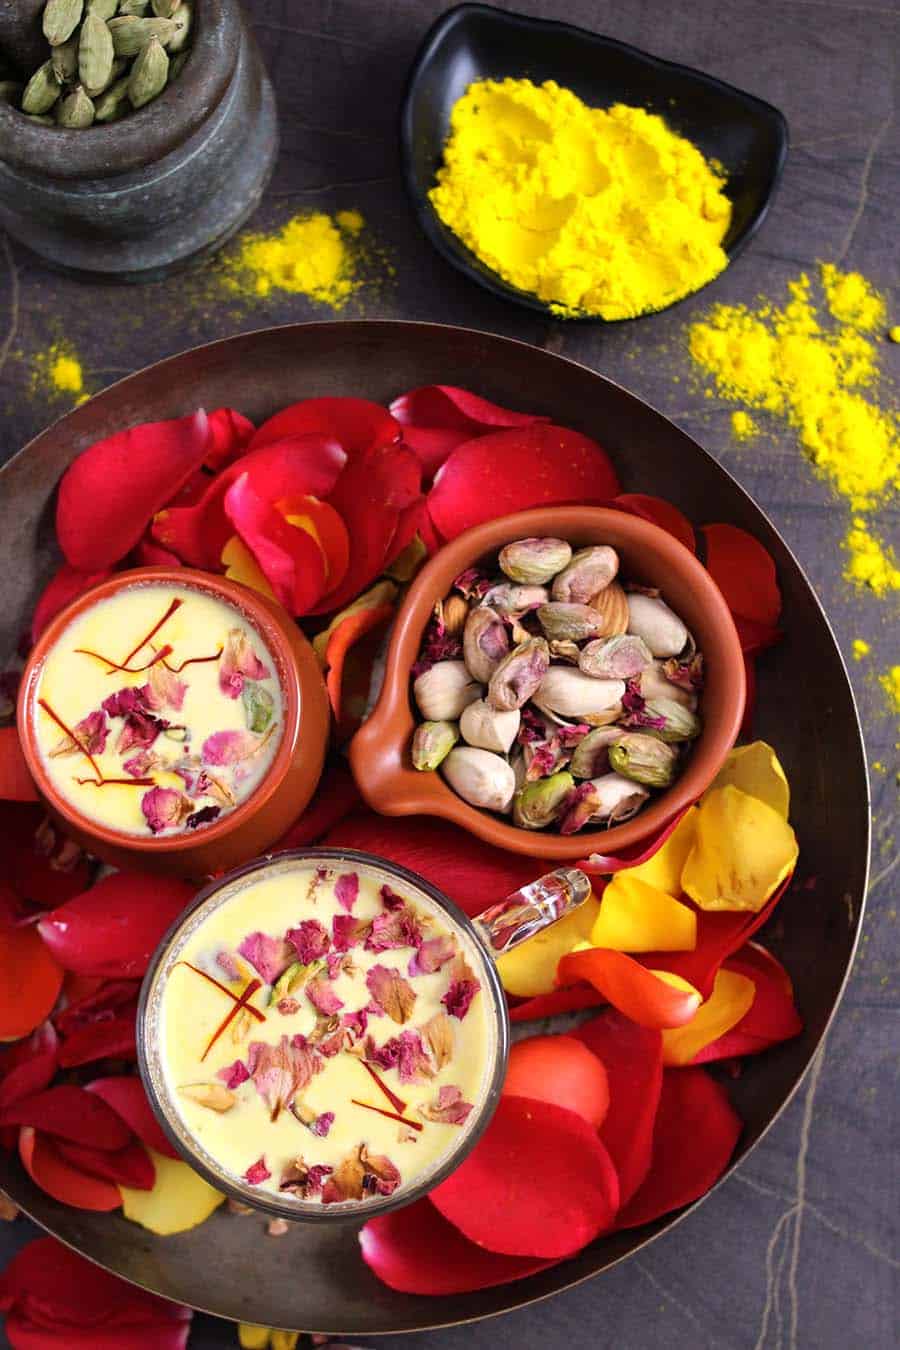 Popular Indian recipes for holi, diwali, navratri, shivratri, ram navami, #milkbased #rose #gulkand